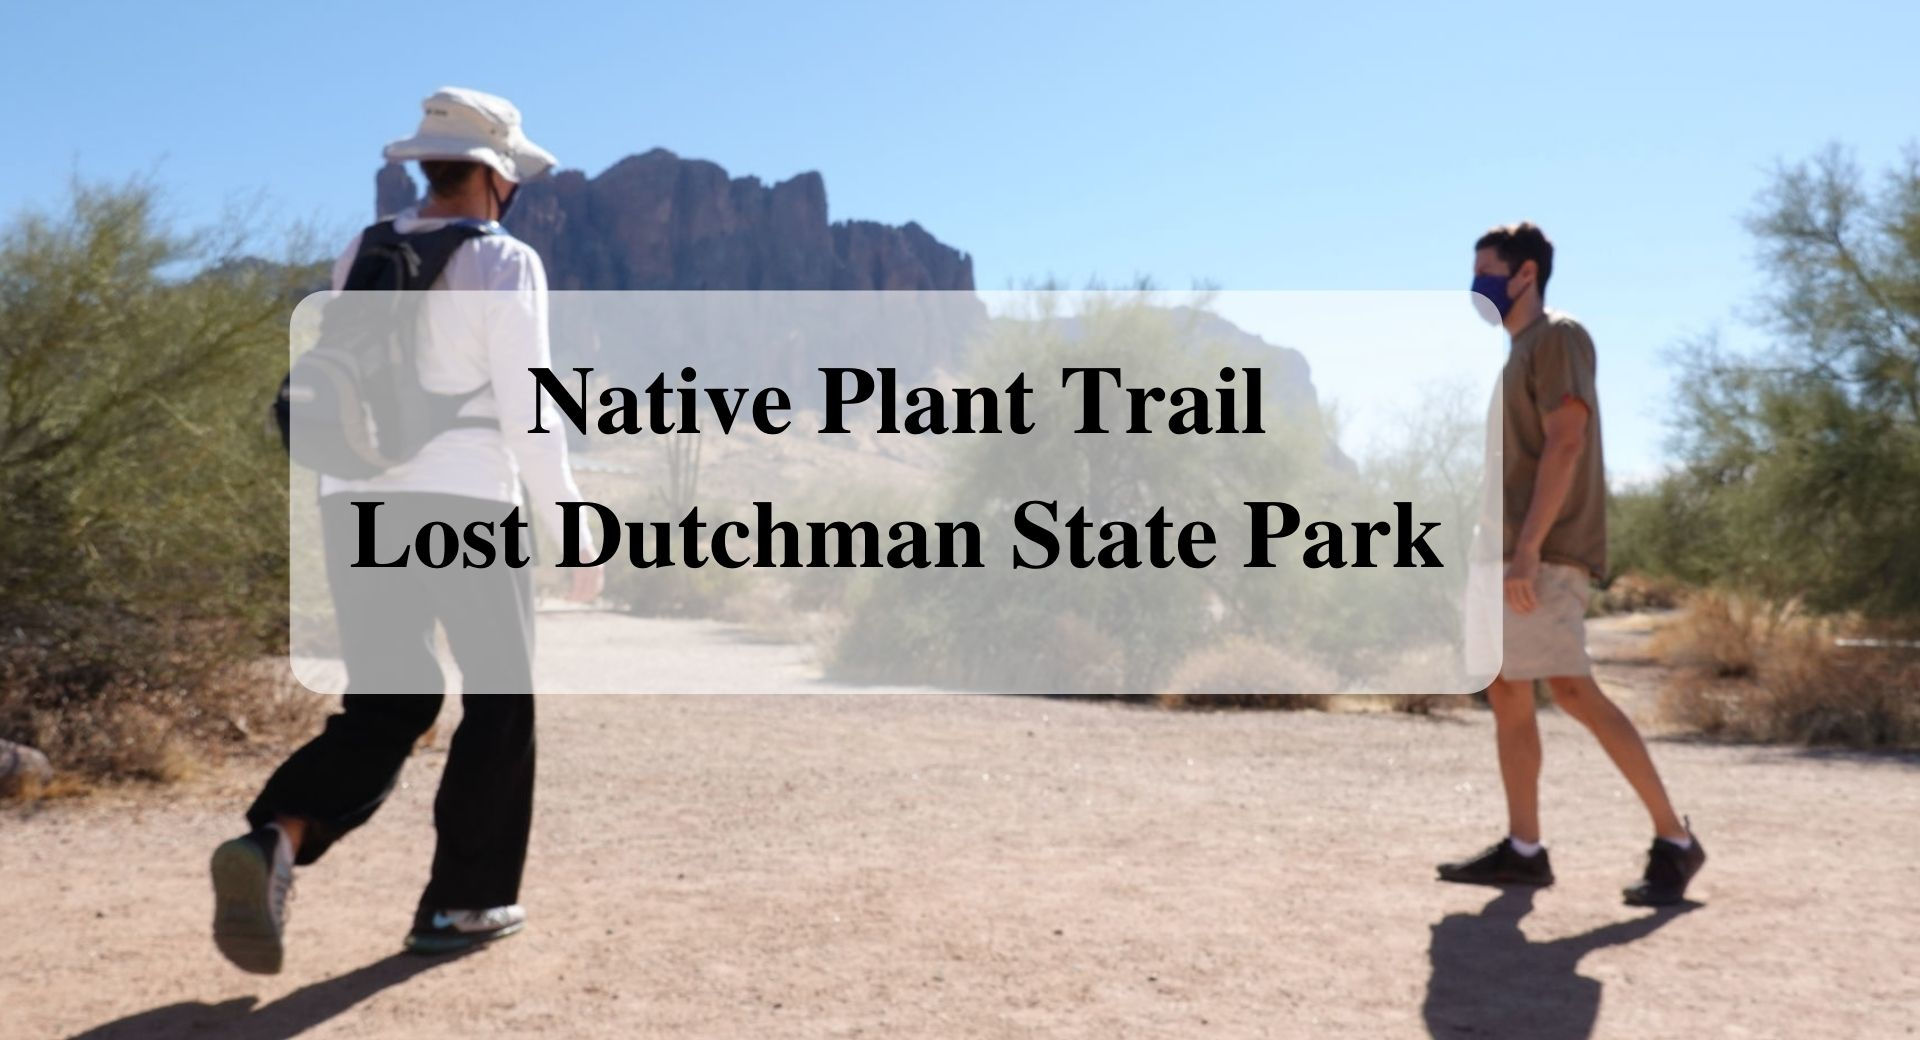 Native Plant Trail Lost Dutchman State Park, Forever sabbatical